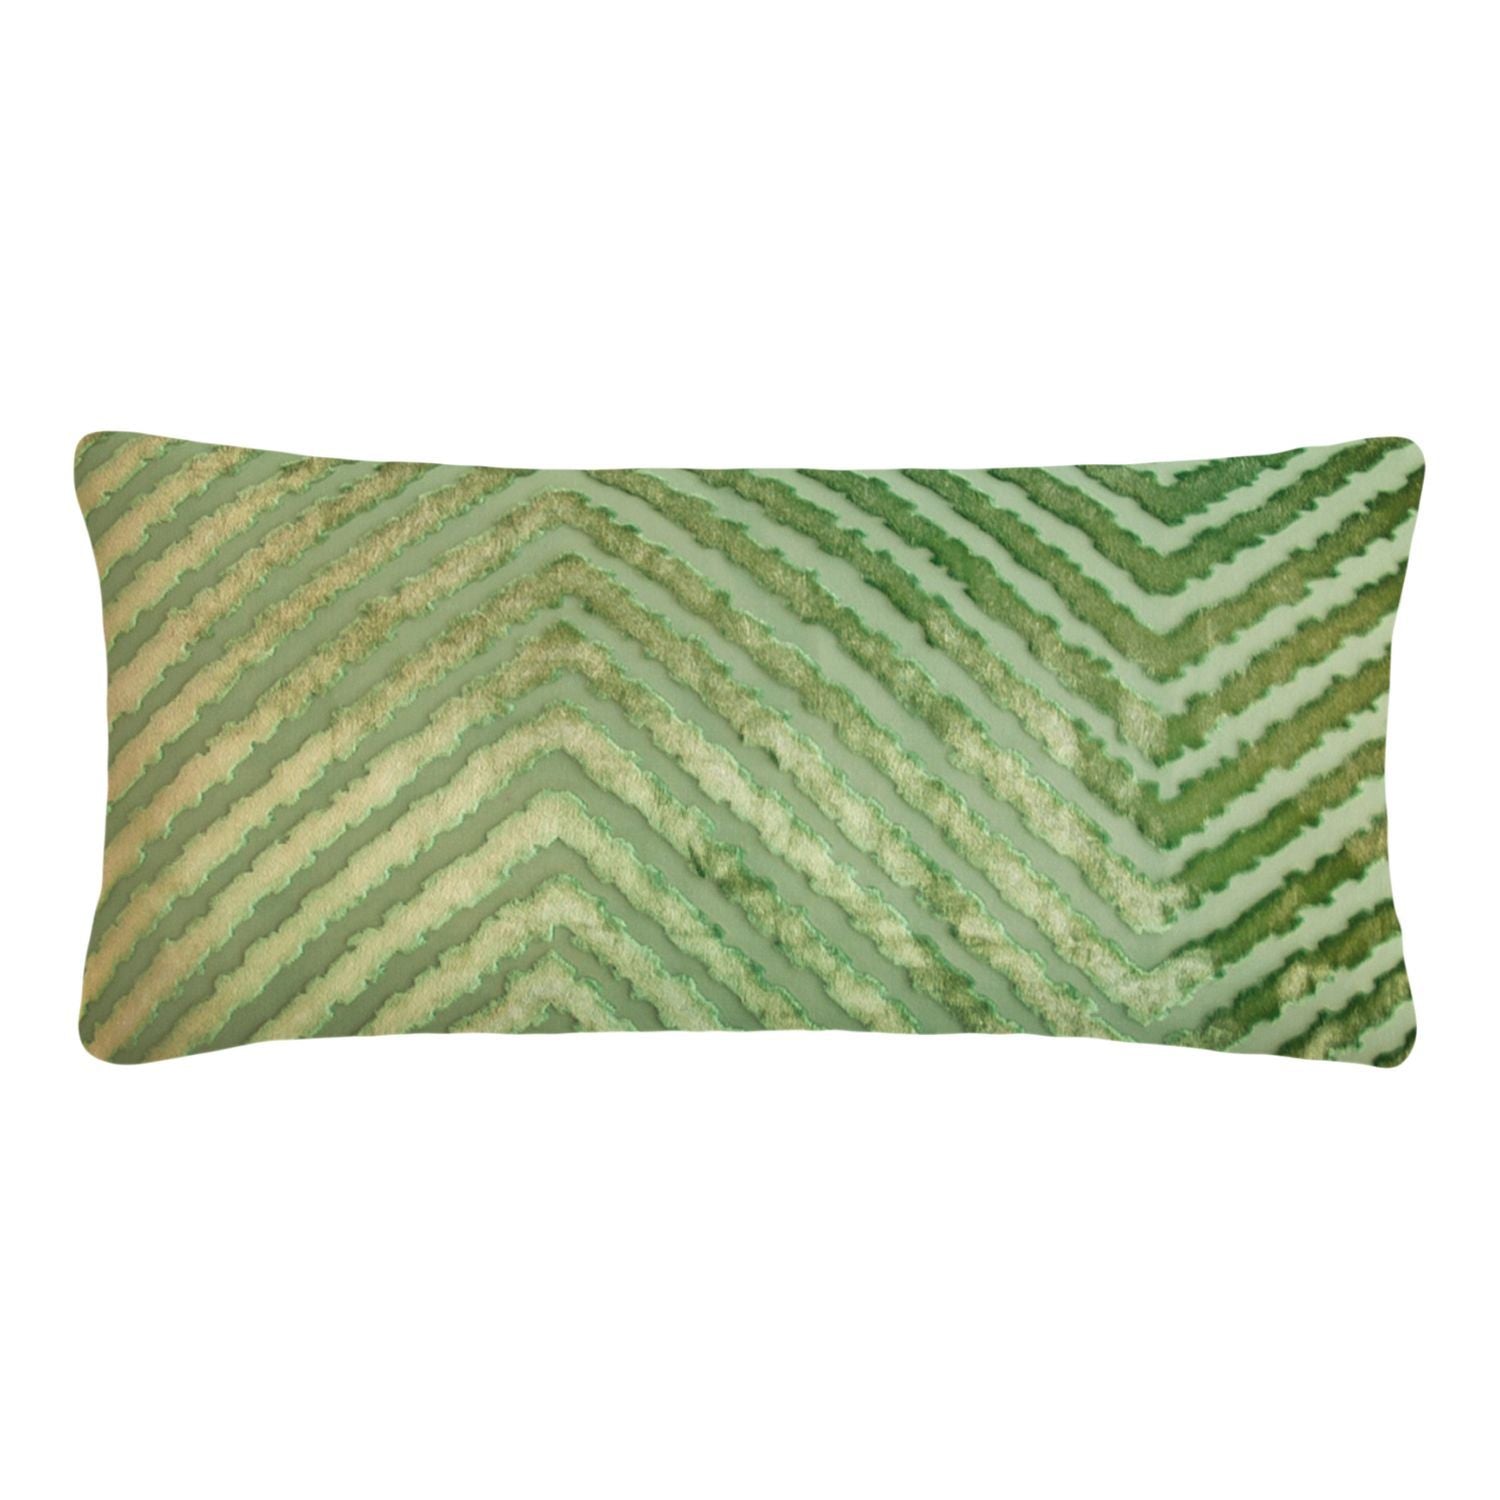 Fig Linens -Grass Chevron Velvet Pillows by Kevin O'Brien Studio